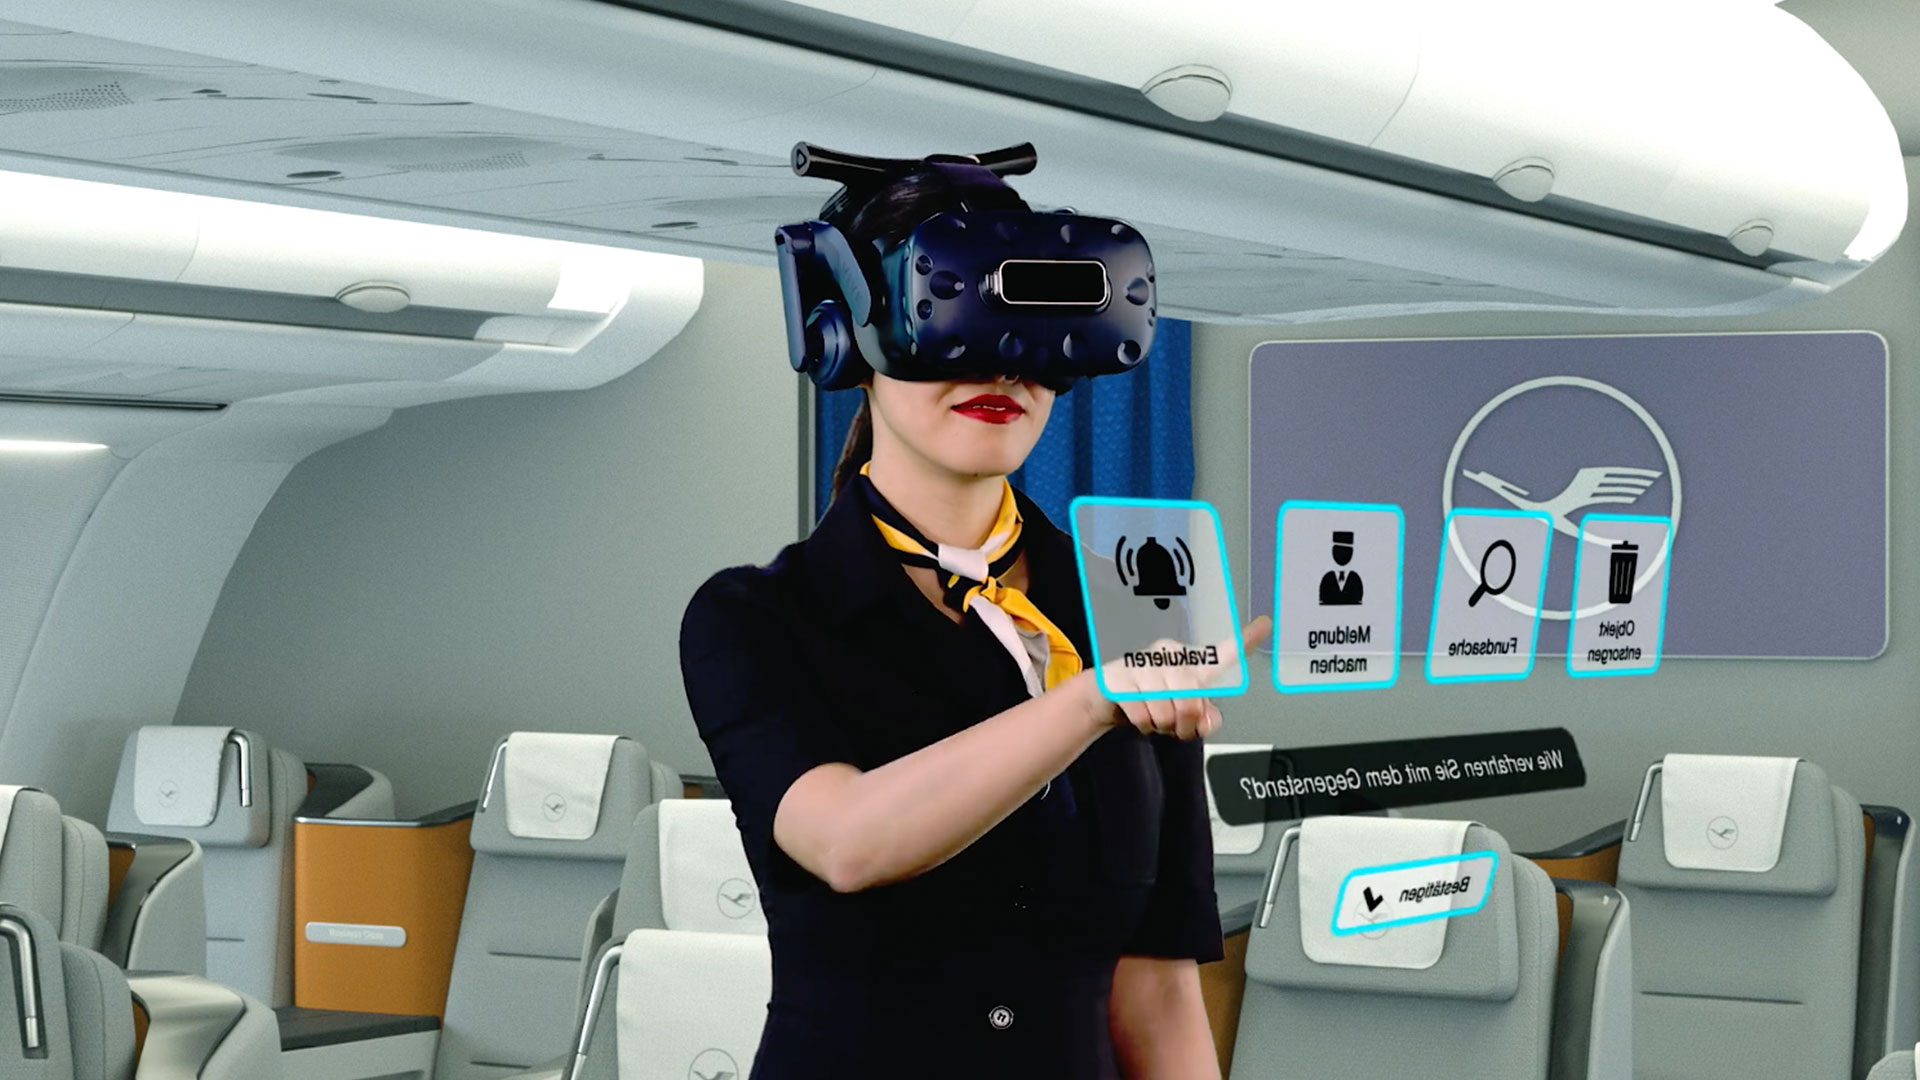 Lufthansa VR flight training with ULtraleap hand tracking technology